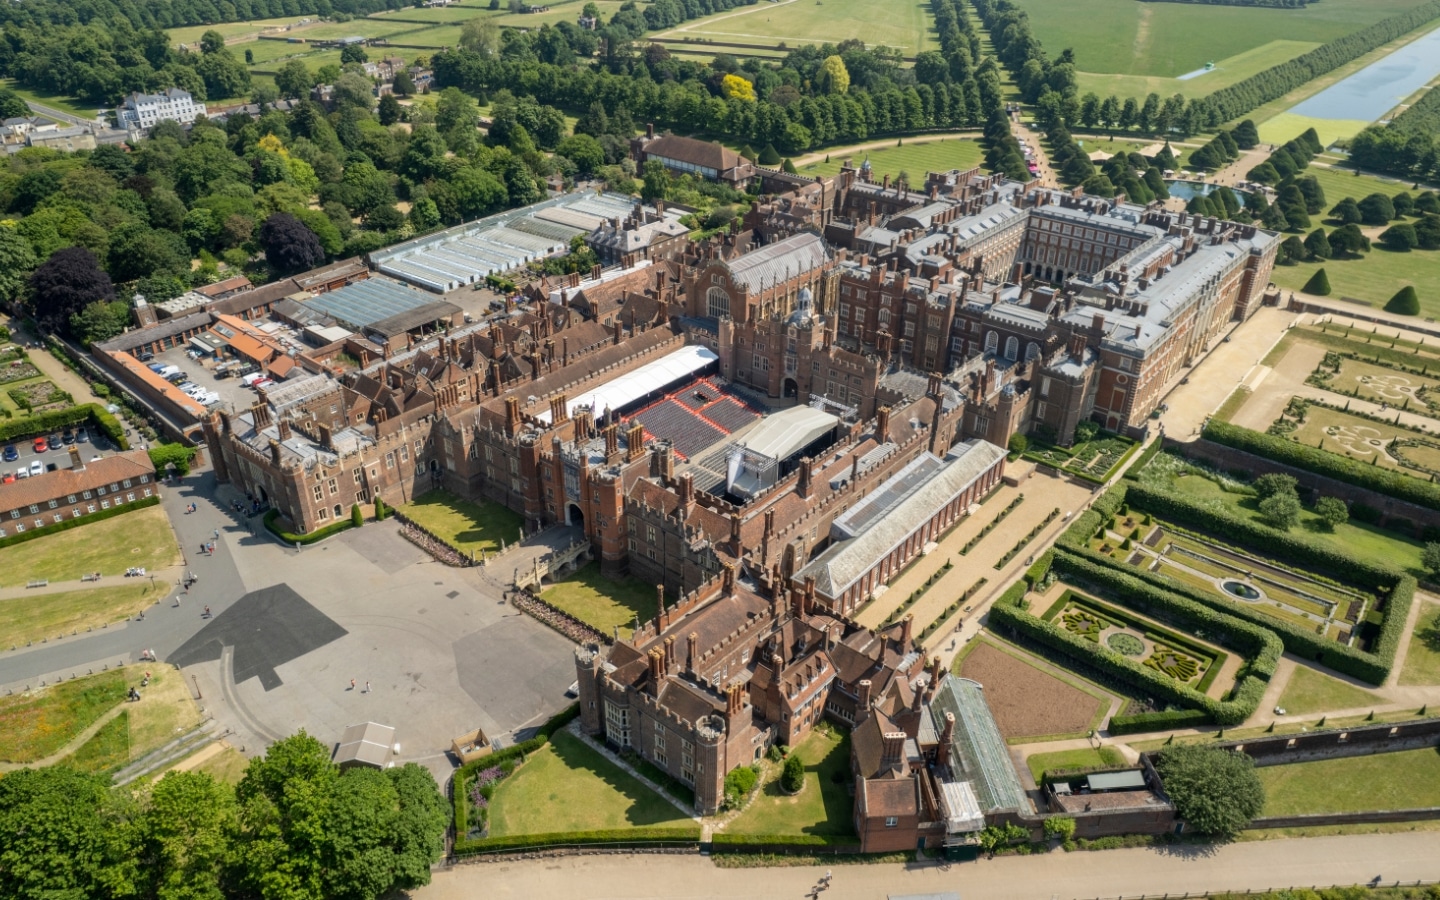 Visit Hampton Court Palace